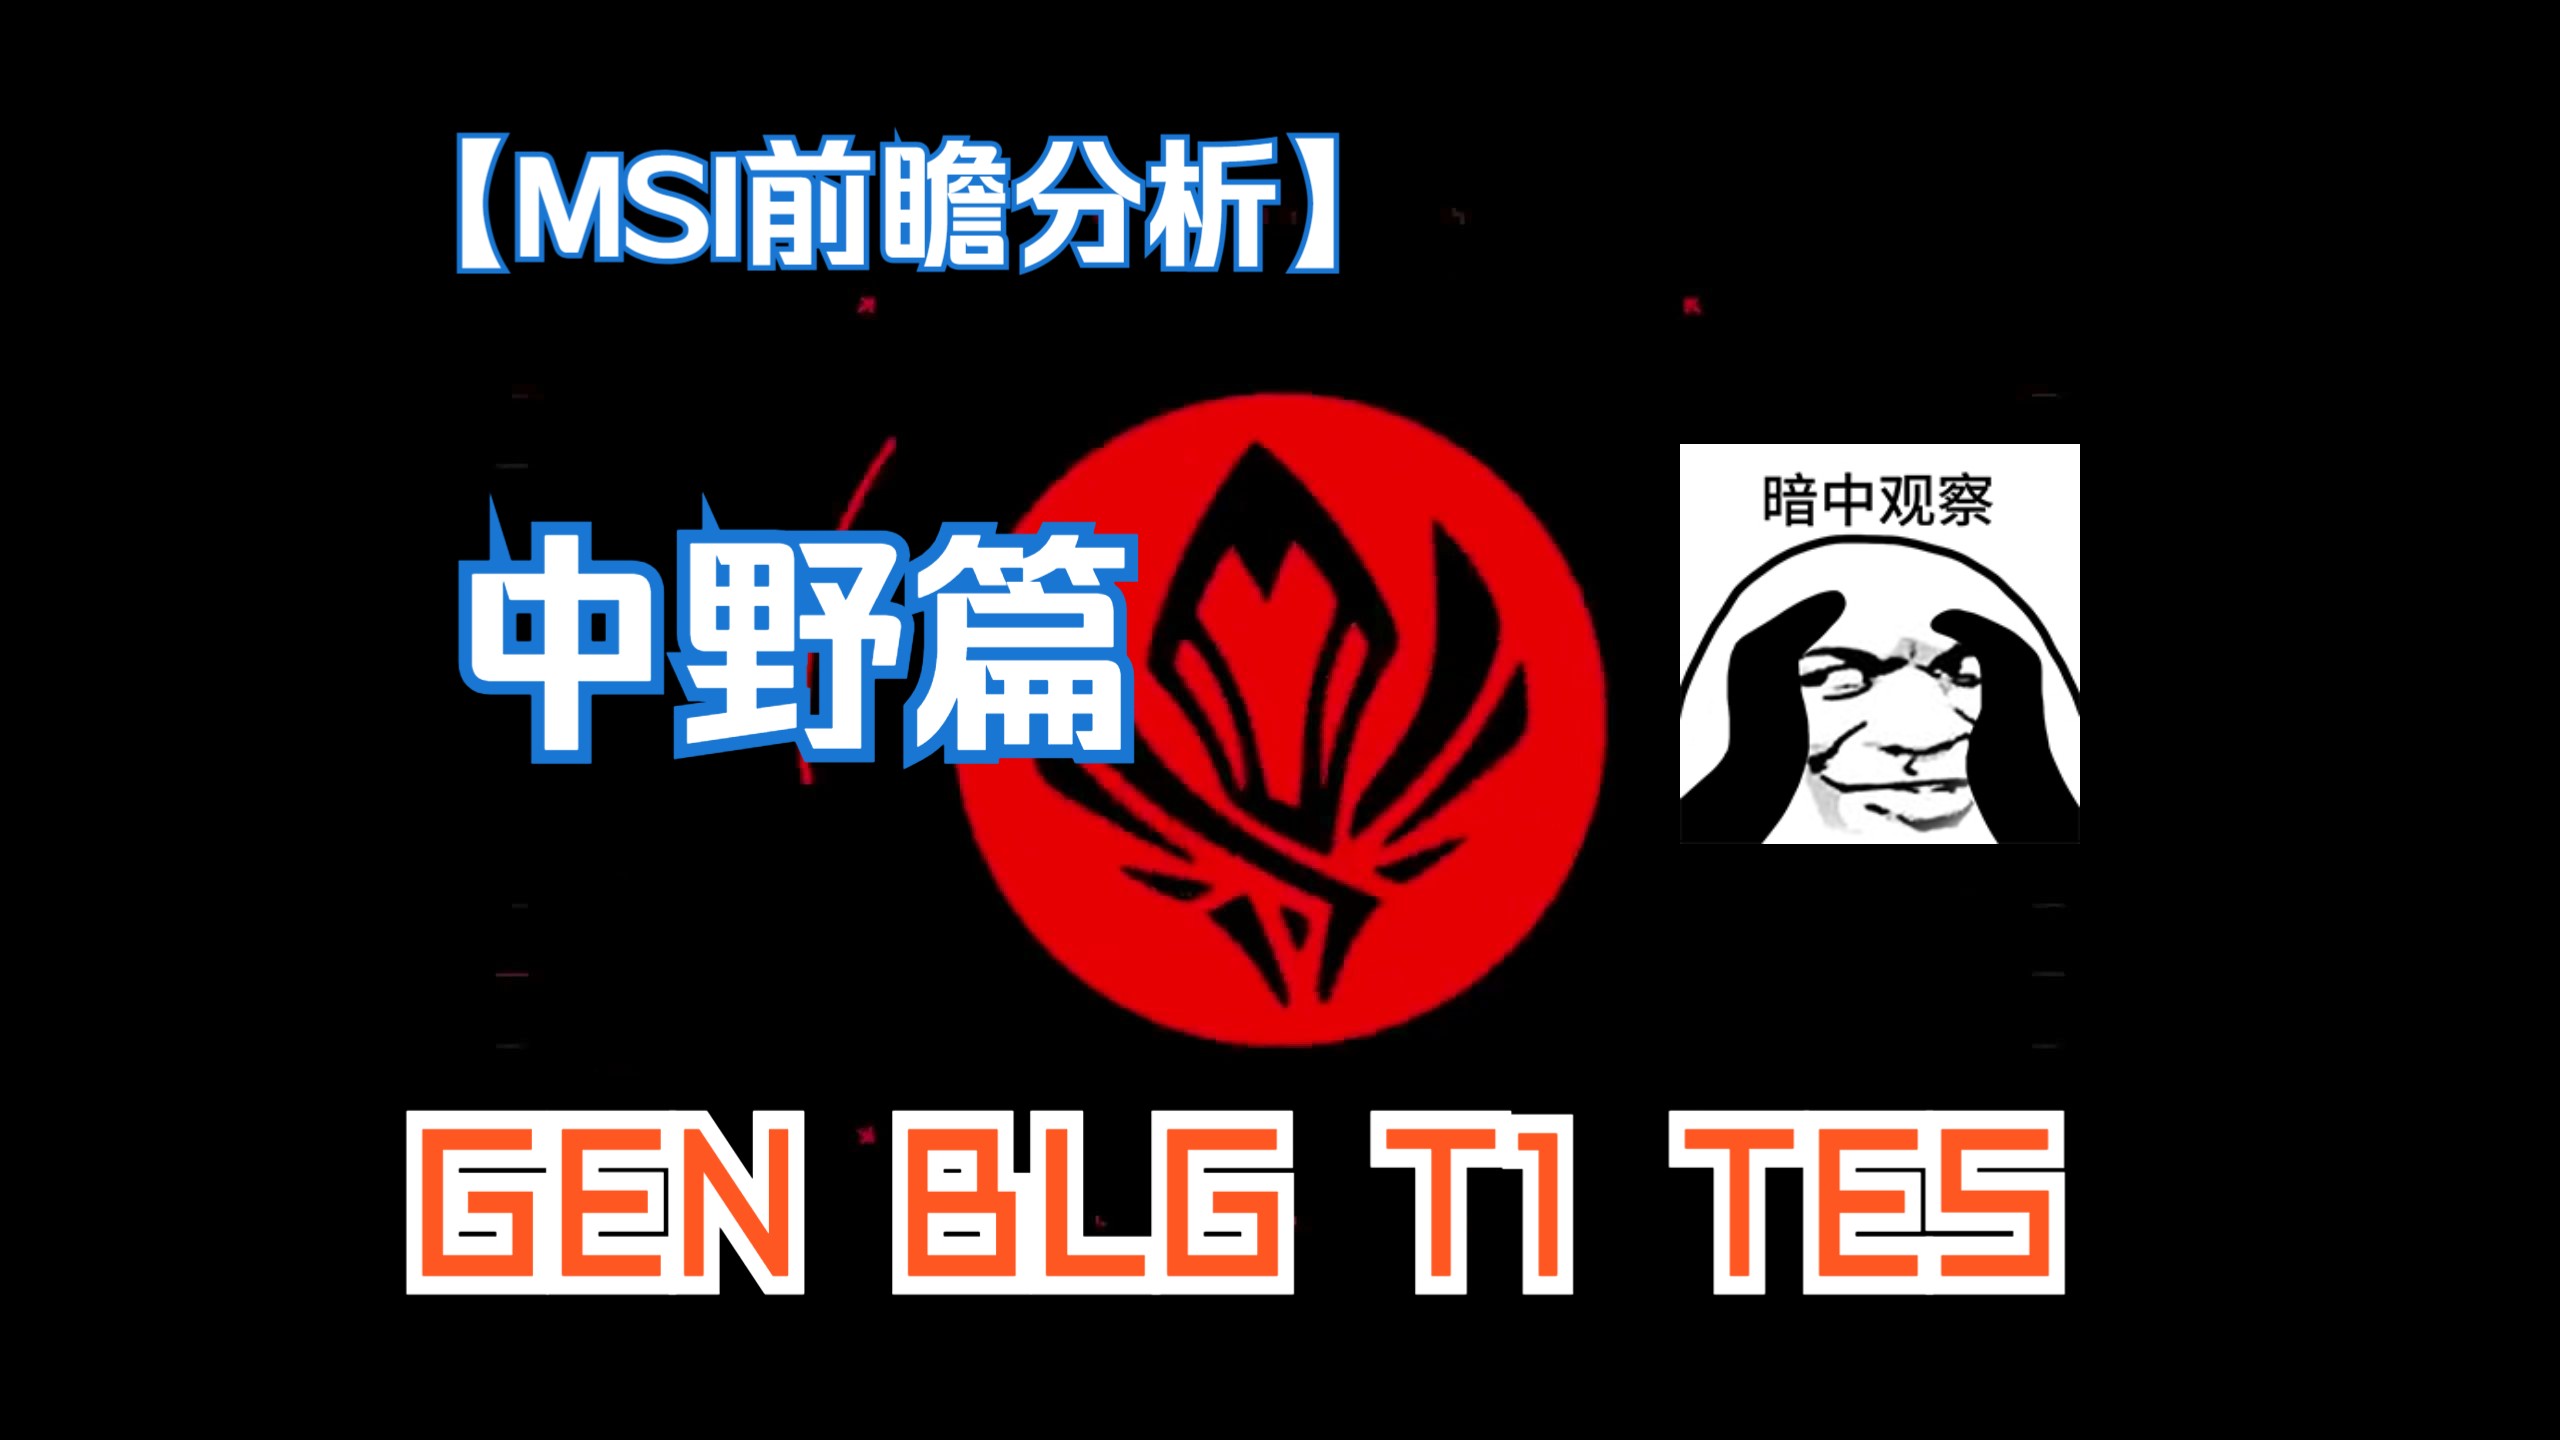 MSI对手前瞻分析 （14.8版本中野篇）T1 GEN BLG TES